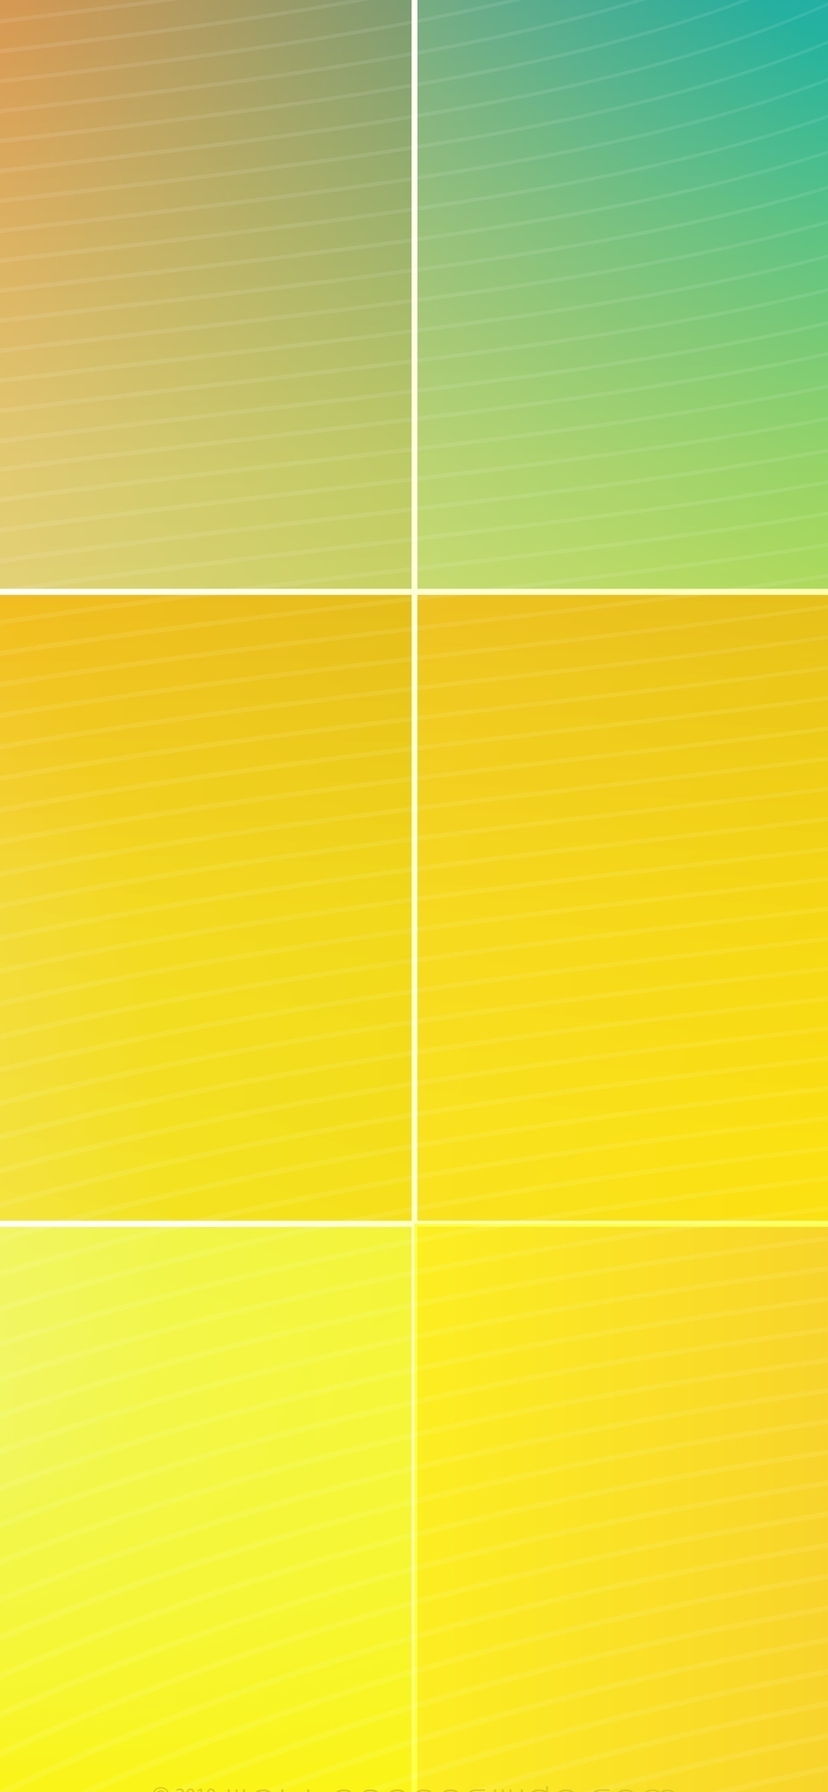 Image: Squares, lines, colors, orange, yellow